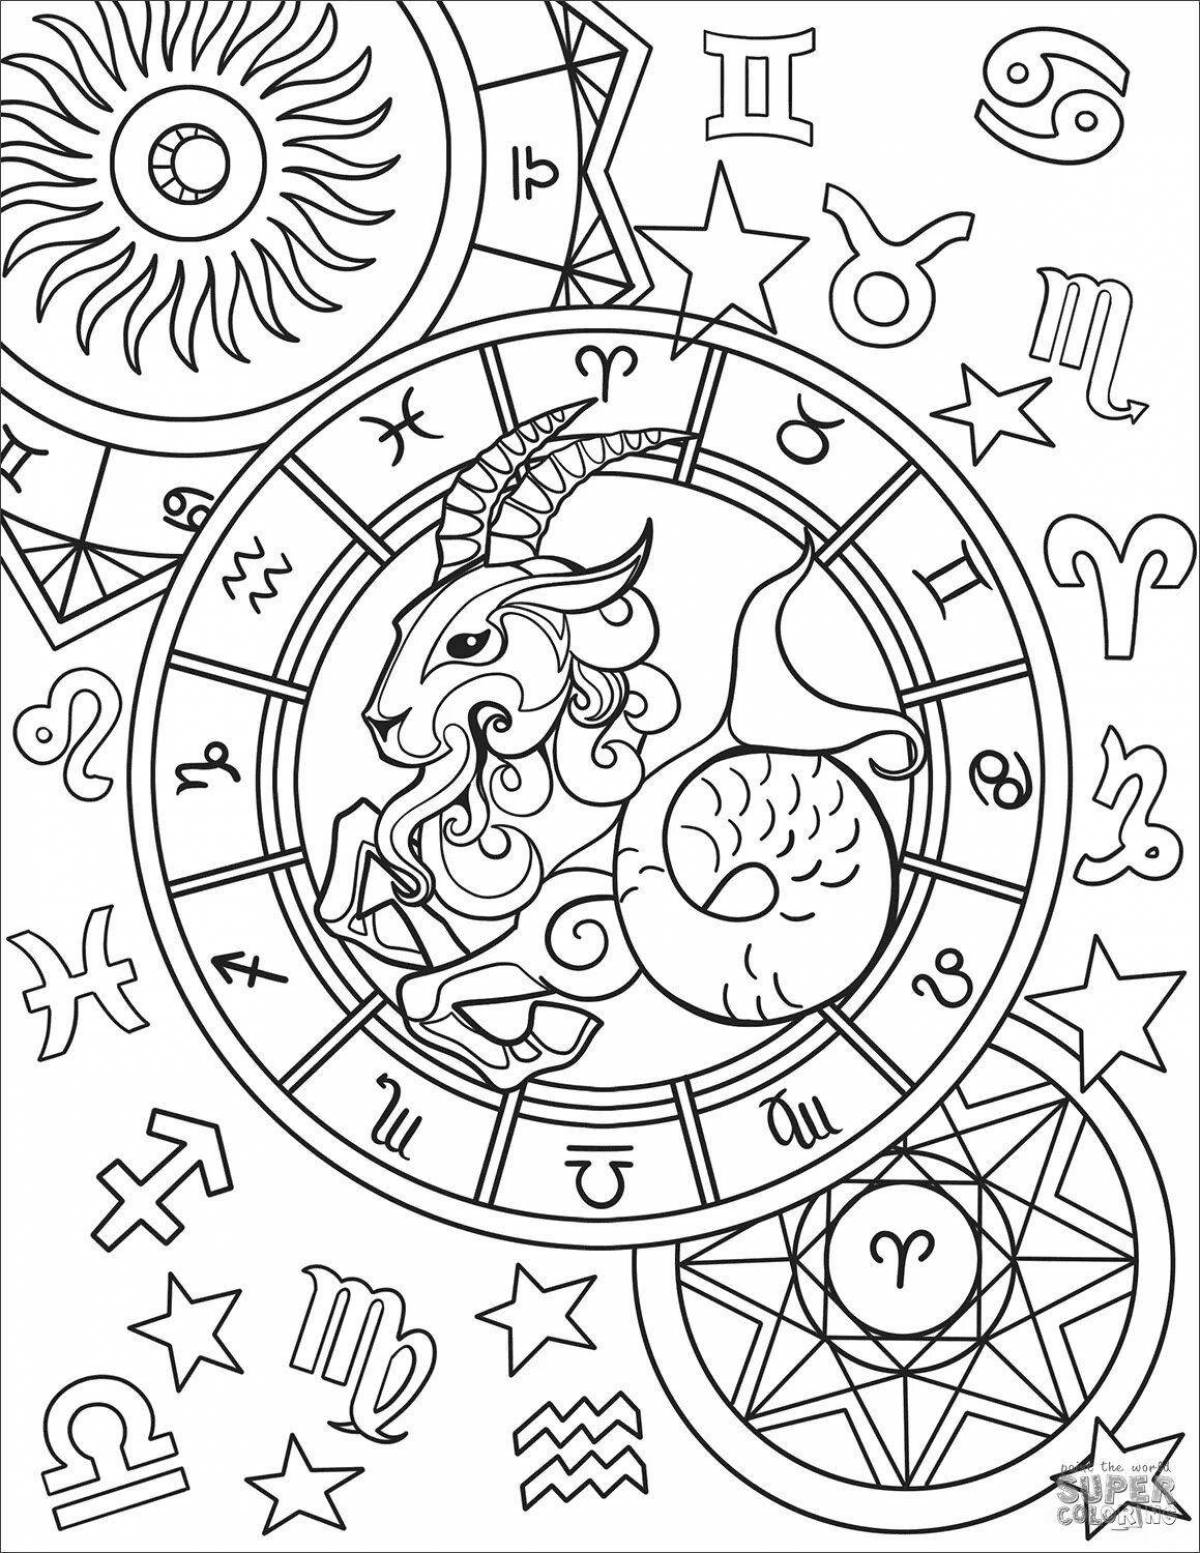 Coloring book artistic zodiac sign Capricorn